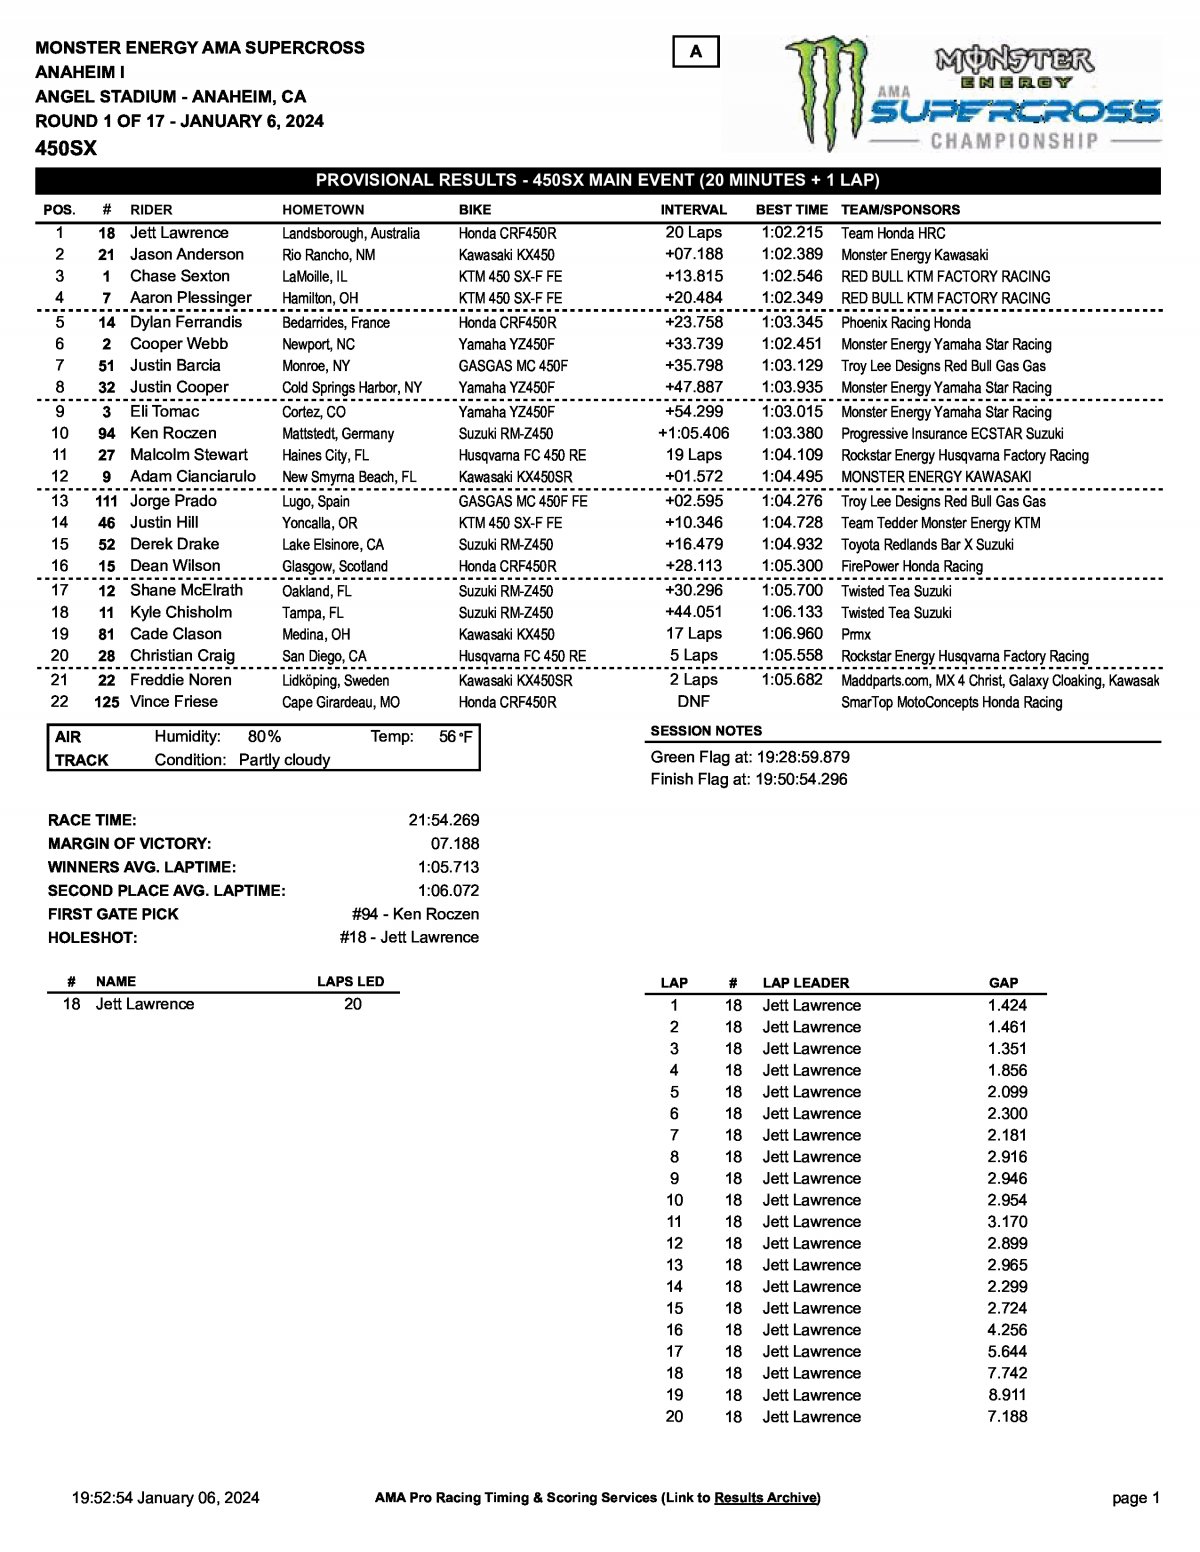 Результаты 1 этапа AMA Supercross 450SX Anaheim-1 (6/01/2024)